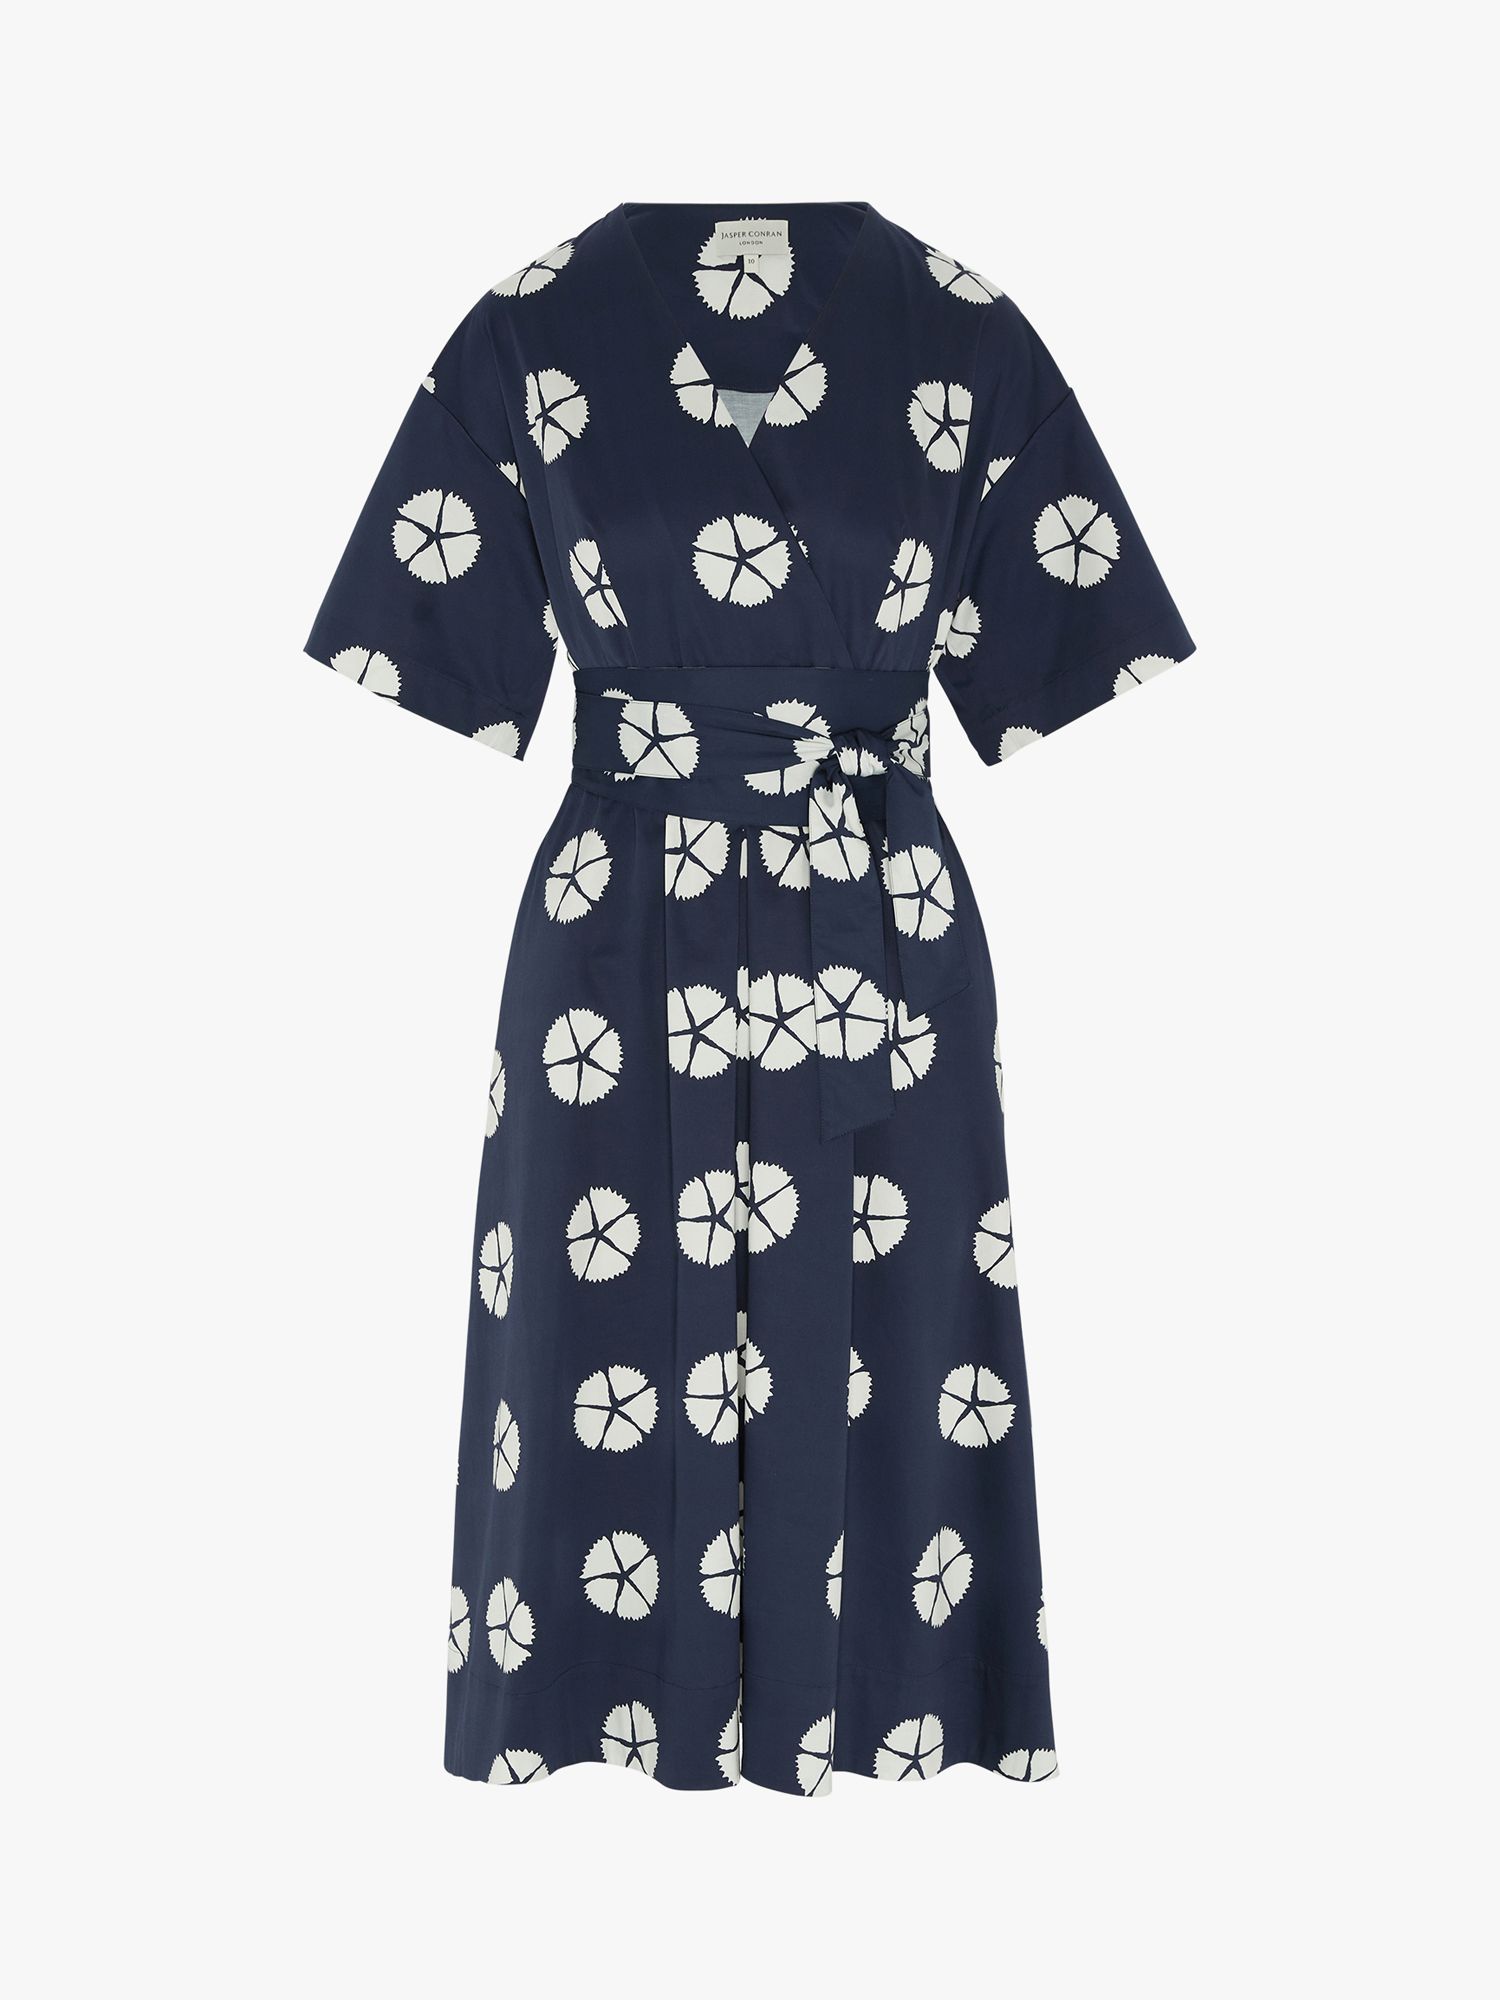 Jasper Conran London Betsy Graphic Print Kimono Wrap Dress, Navy, 8